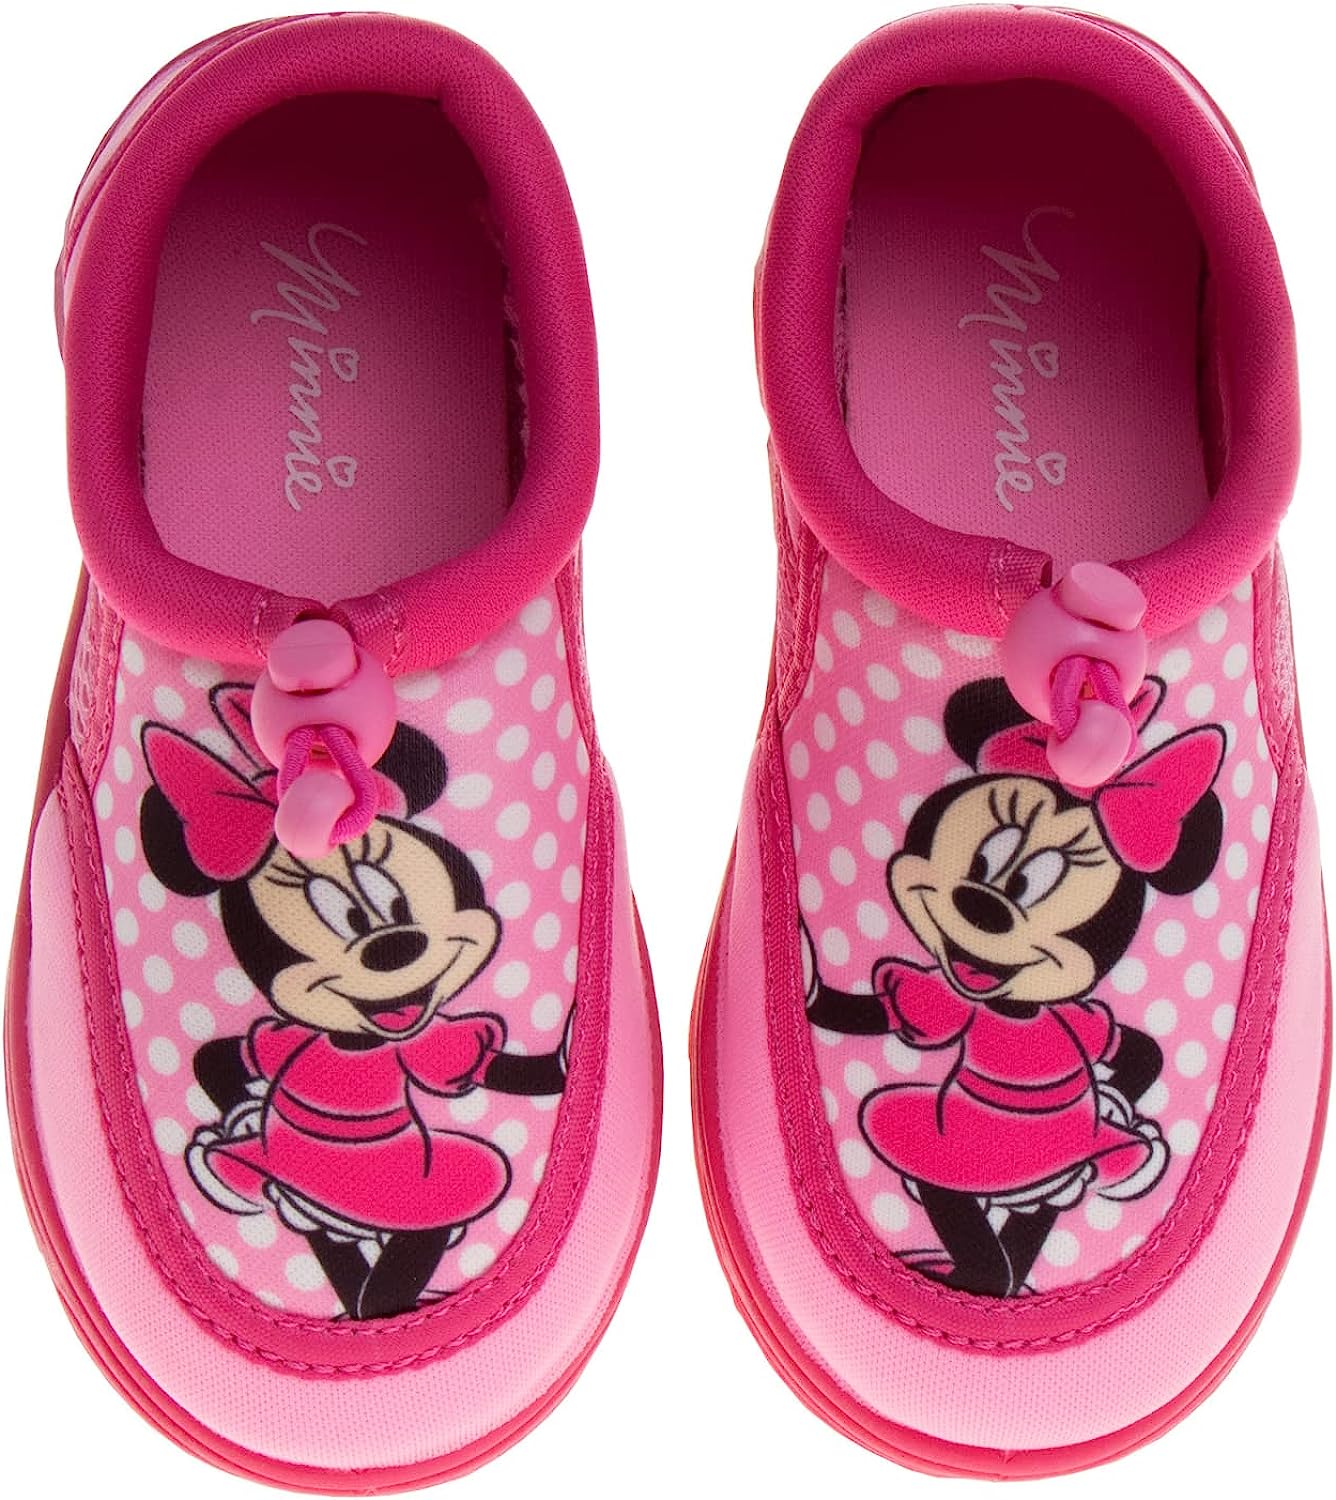 Disney Minnie Mouse Water Shoes - Pool Aqua Socks for [...]